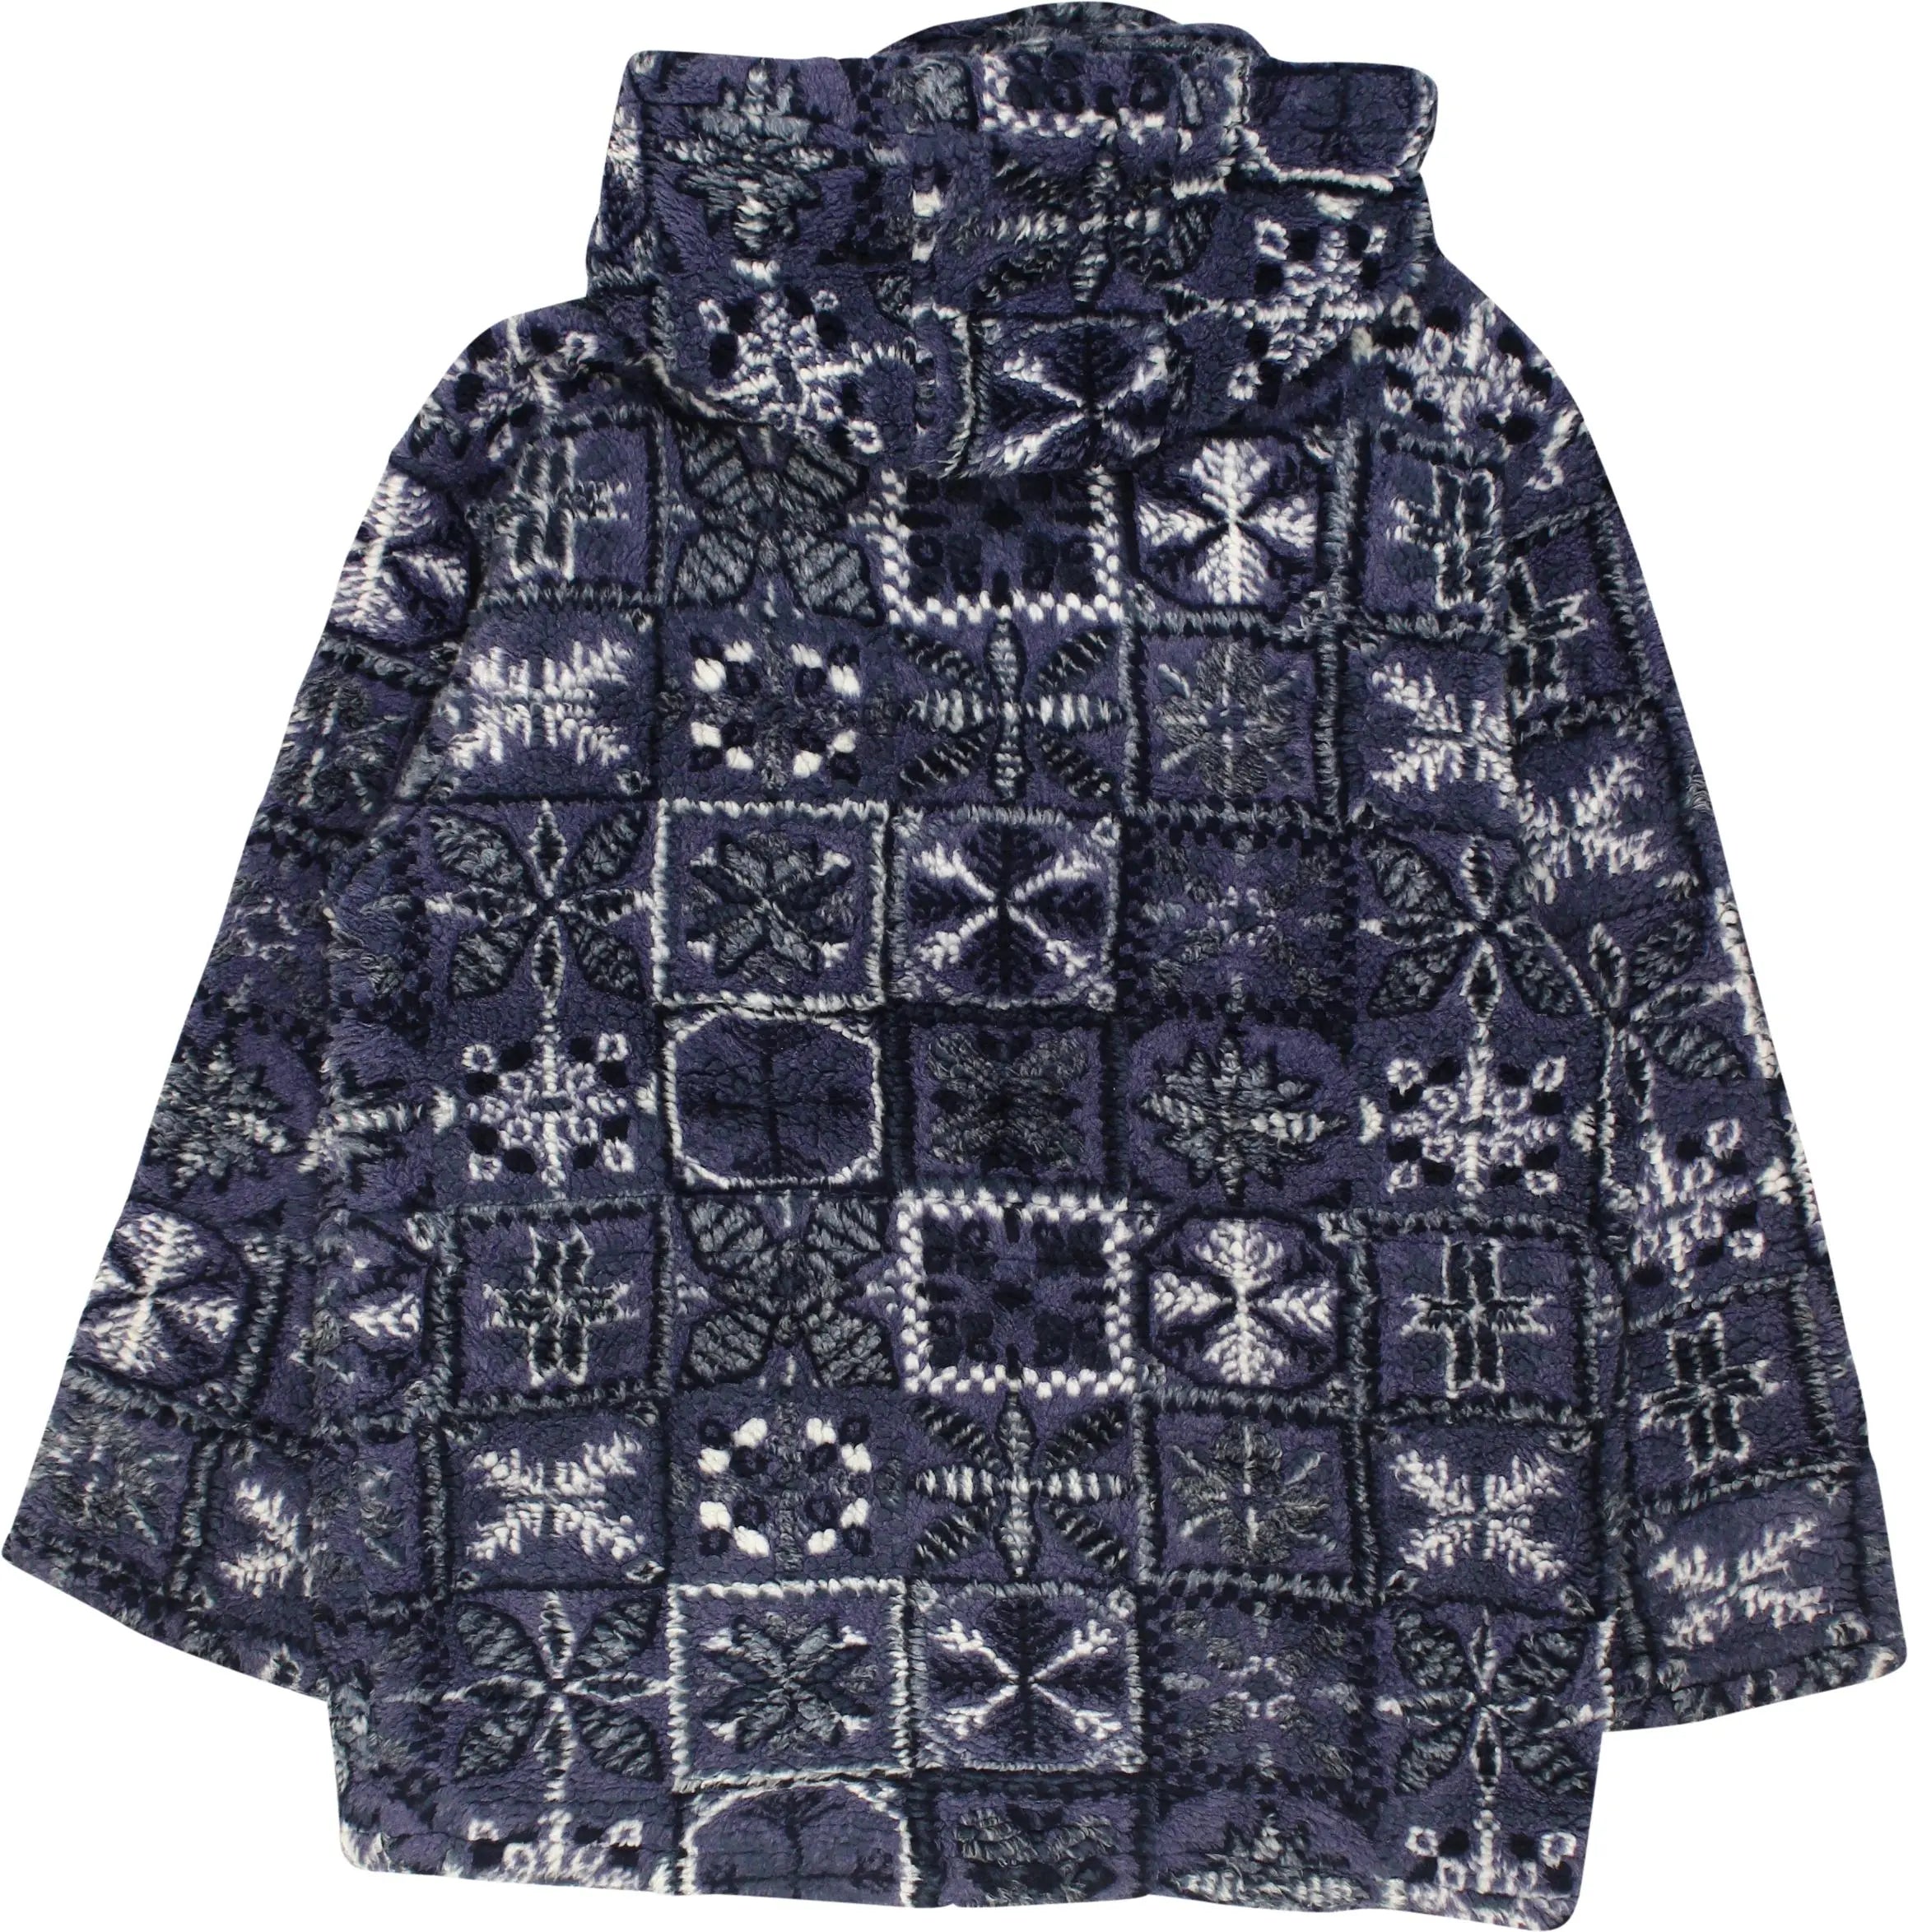 Brugi - Fleece- ThriftTale.com - Vintage and second handclothing